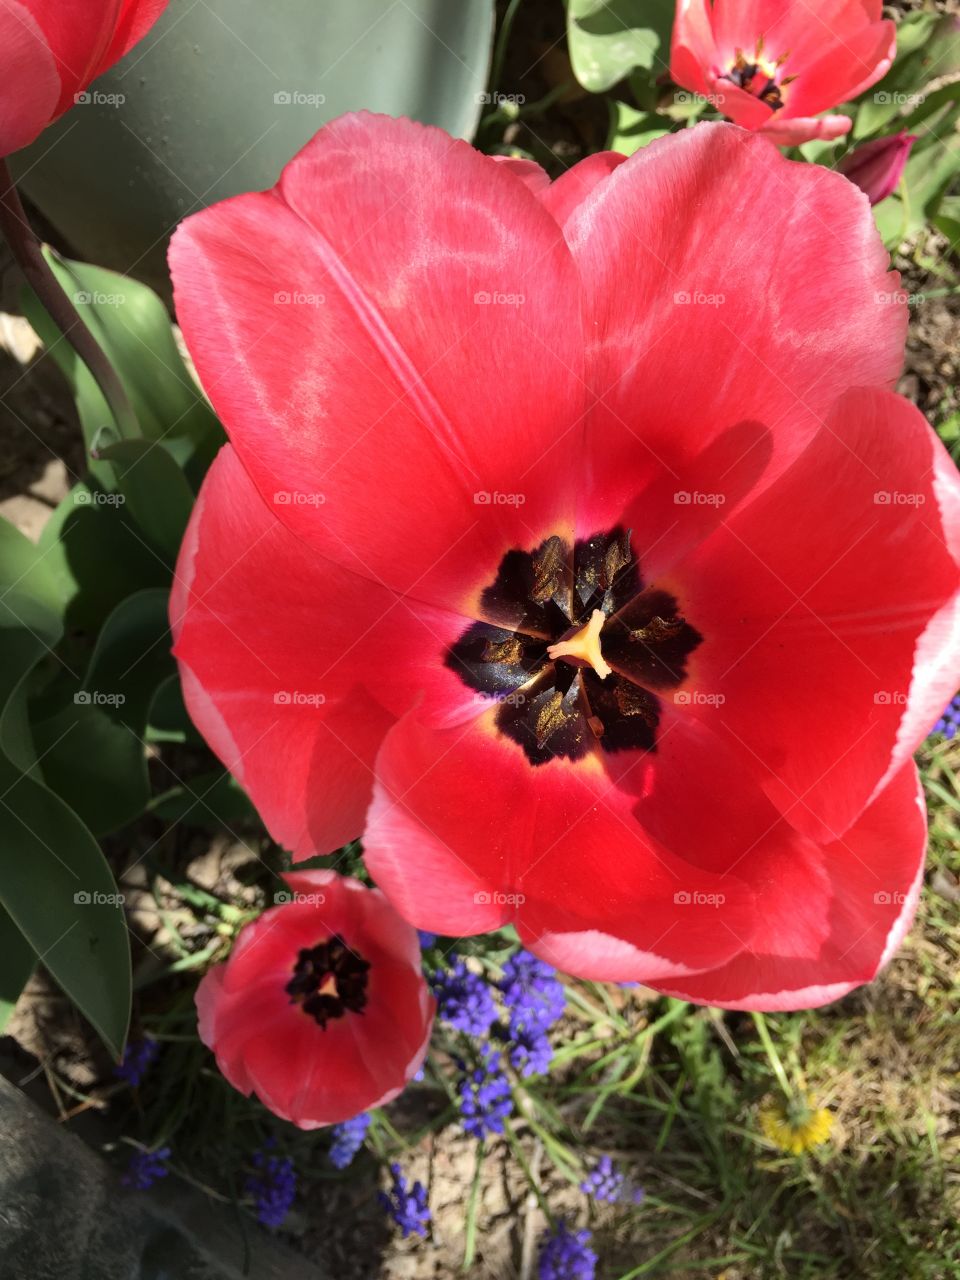 Pink Tulips and Purple Hyacinths